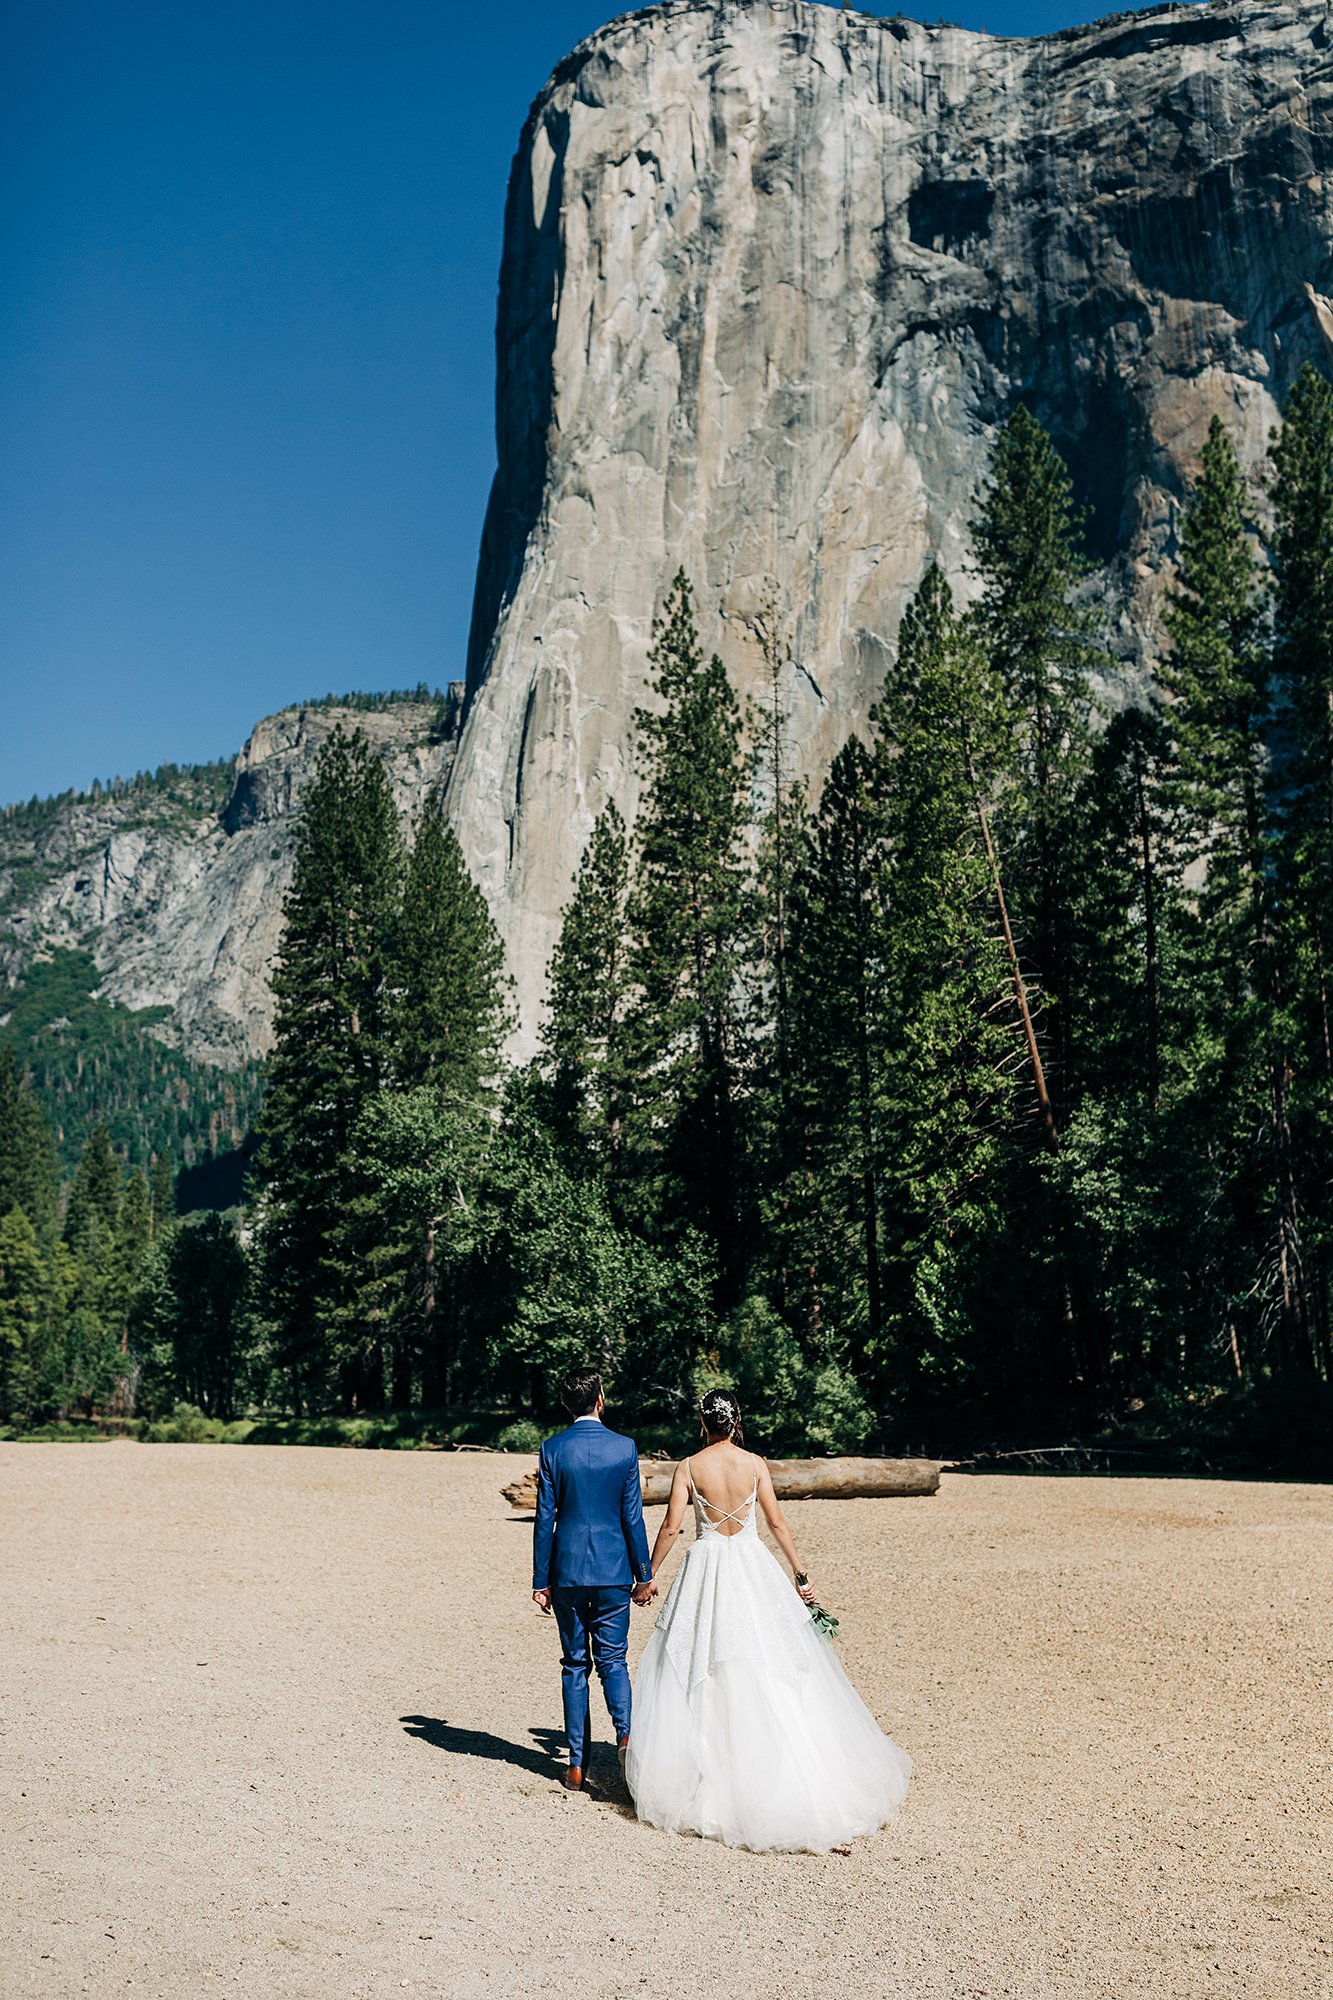 Yooree and Jarrod walk together under El Capitan on their wedding day. 